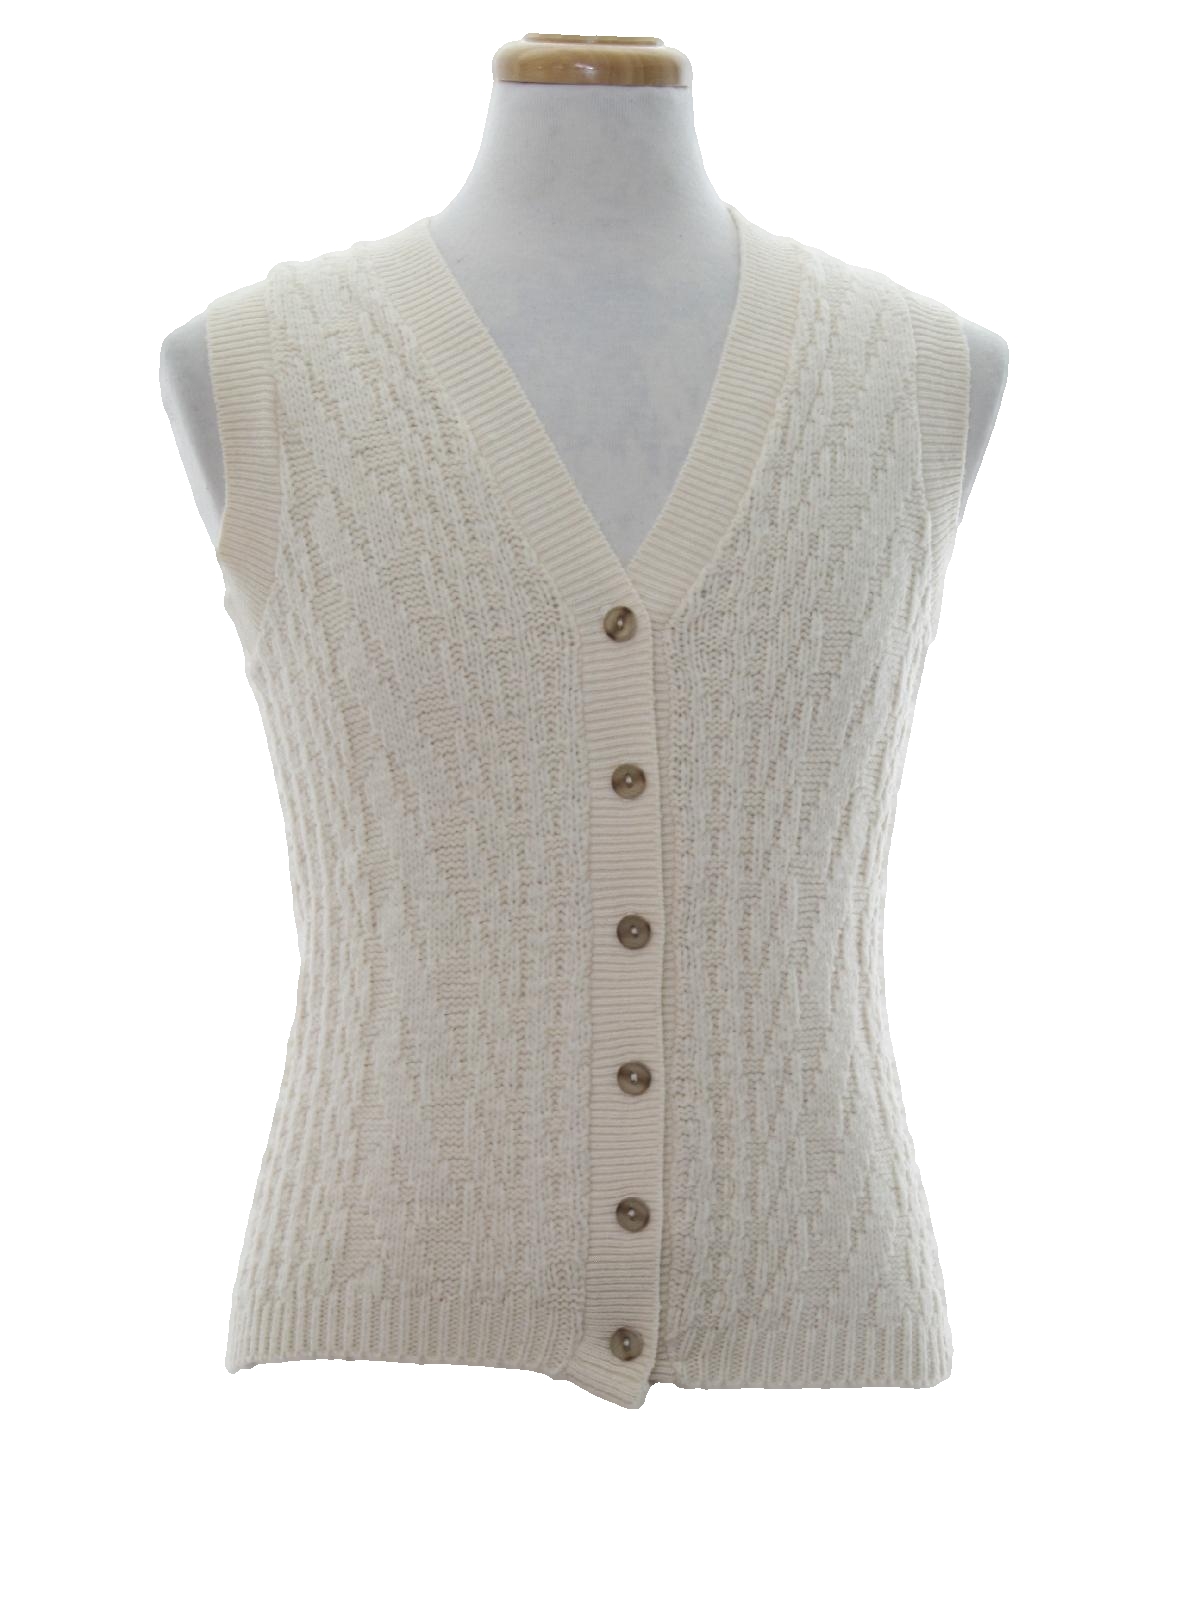 Retro 60s Sweater (Bradley) : 60s -Bradley- Mens winter white chunky ...